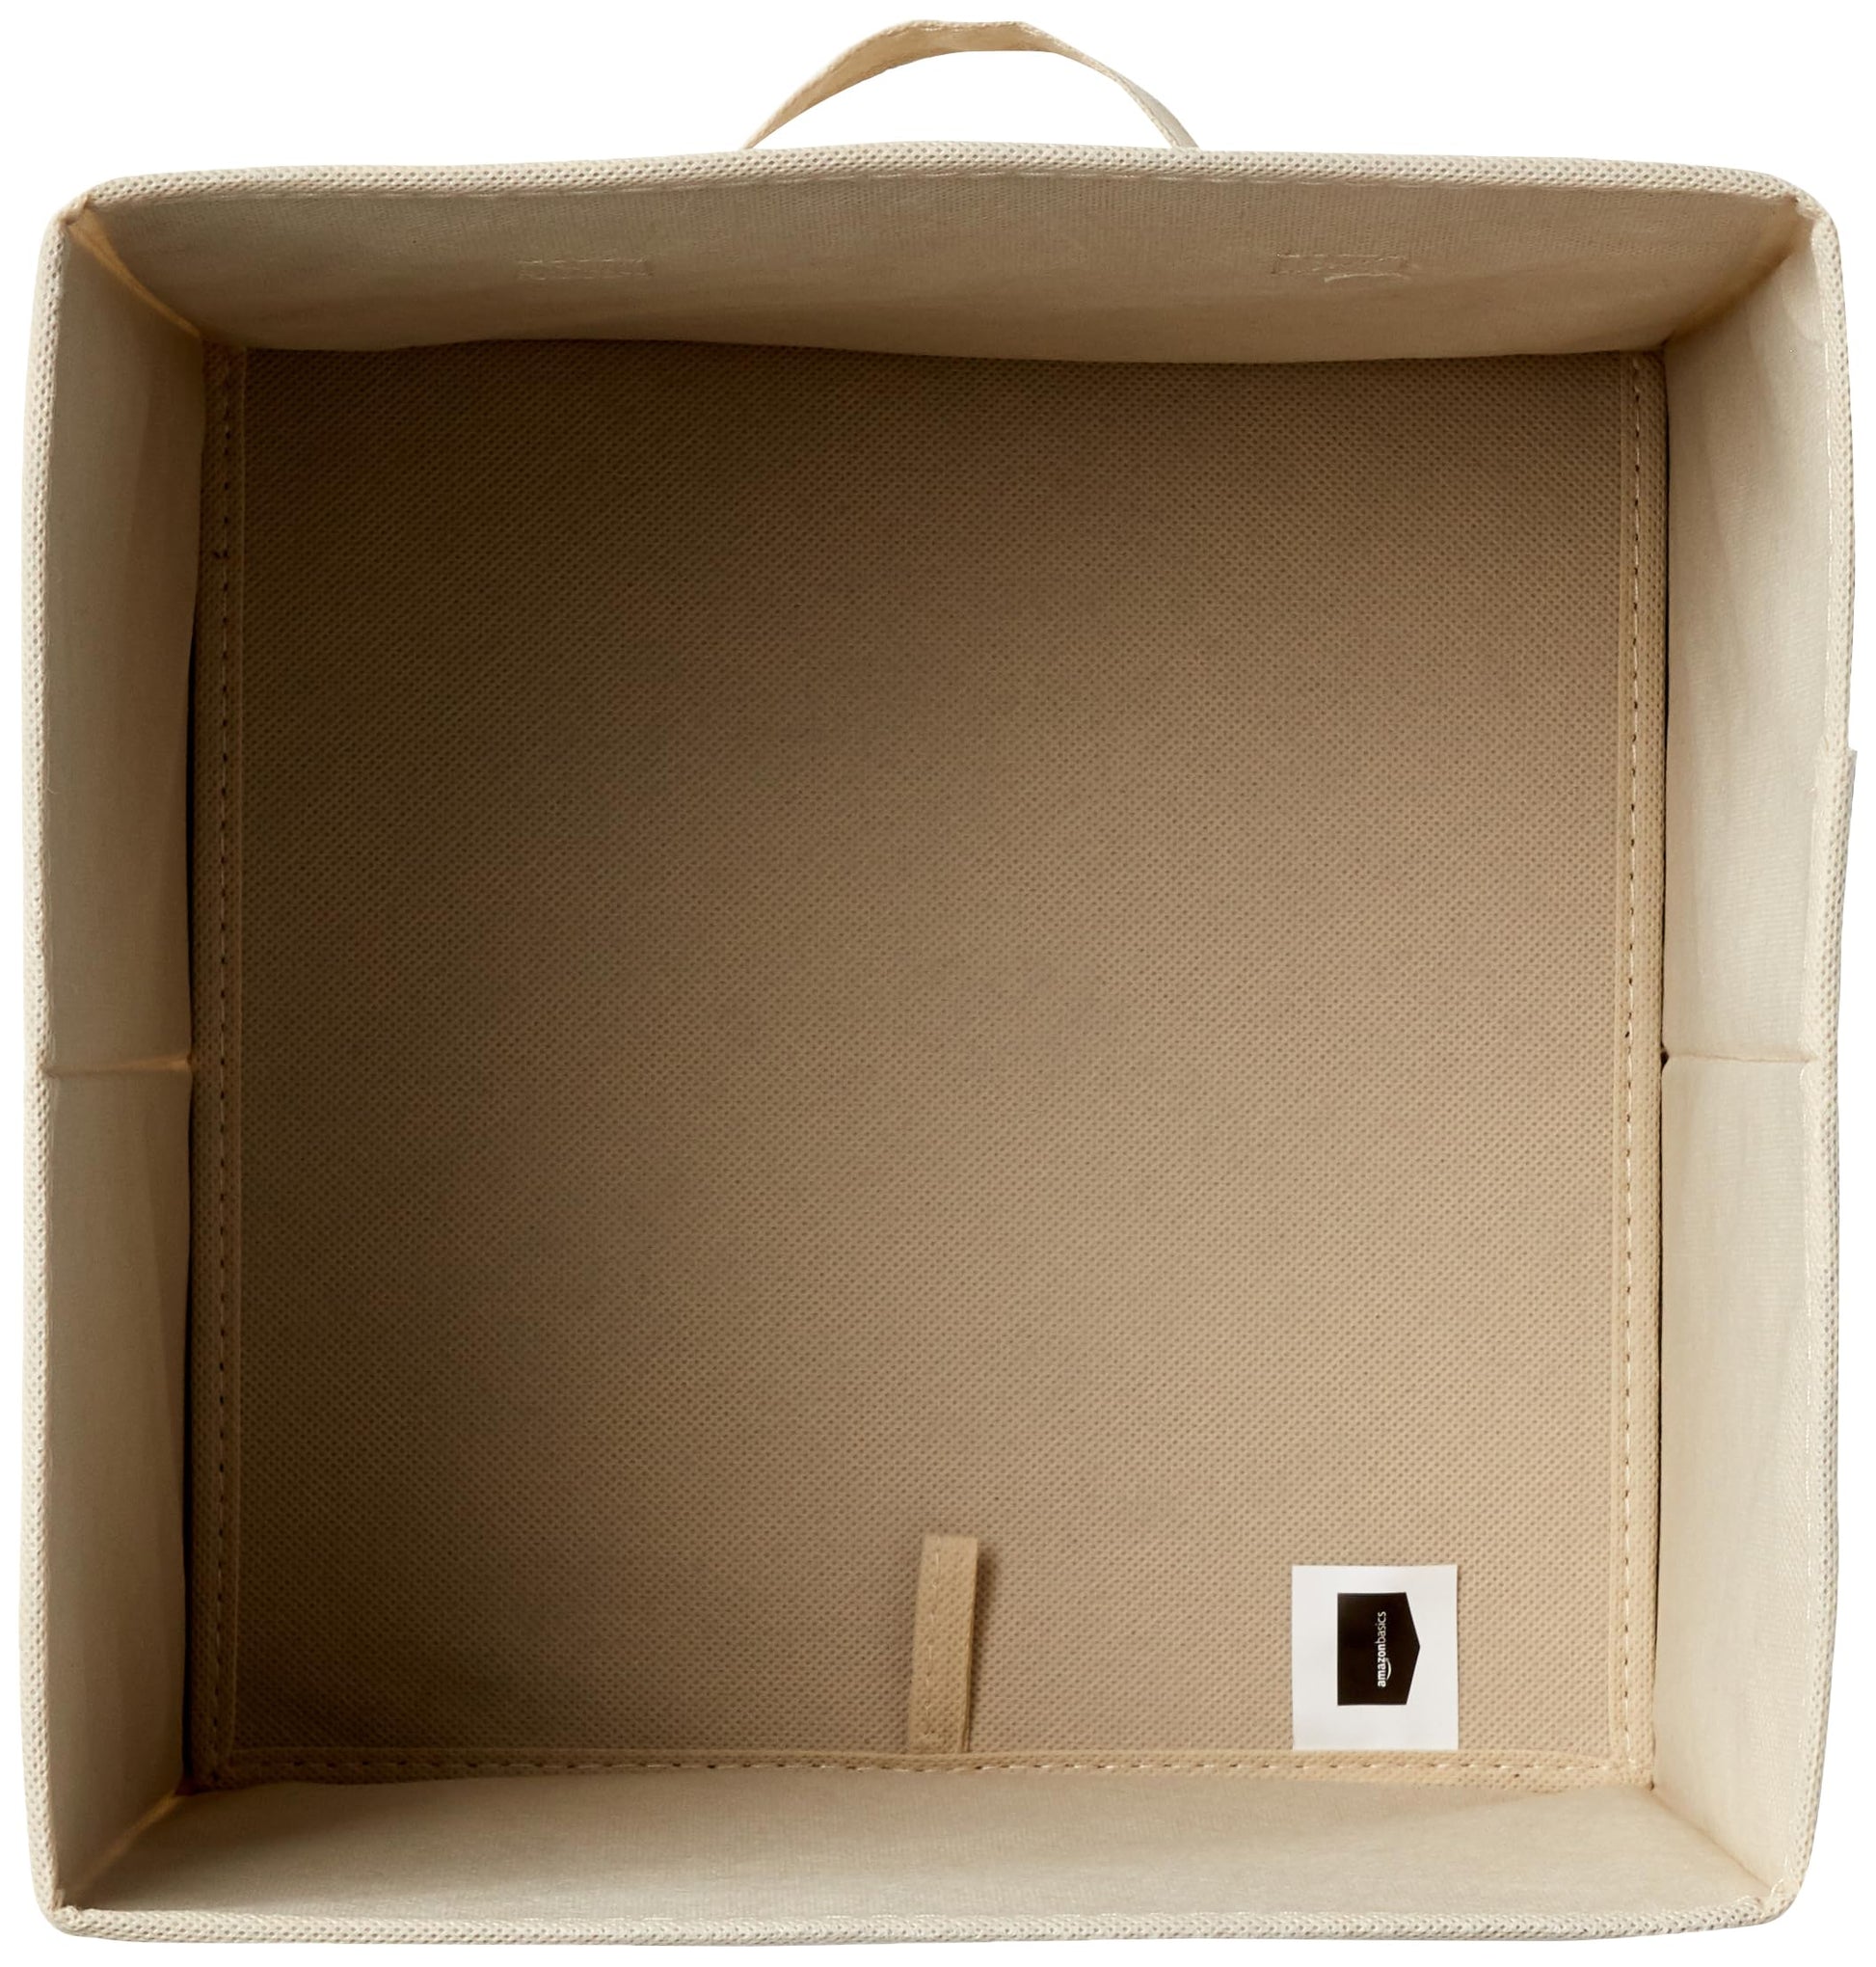   Basics Collapsible Fabric Storage Cube